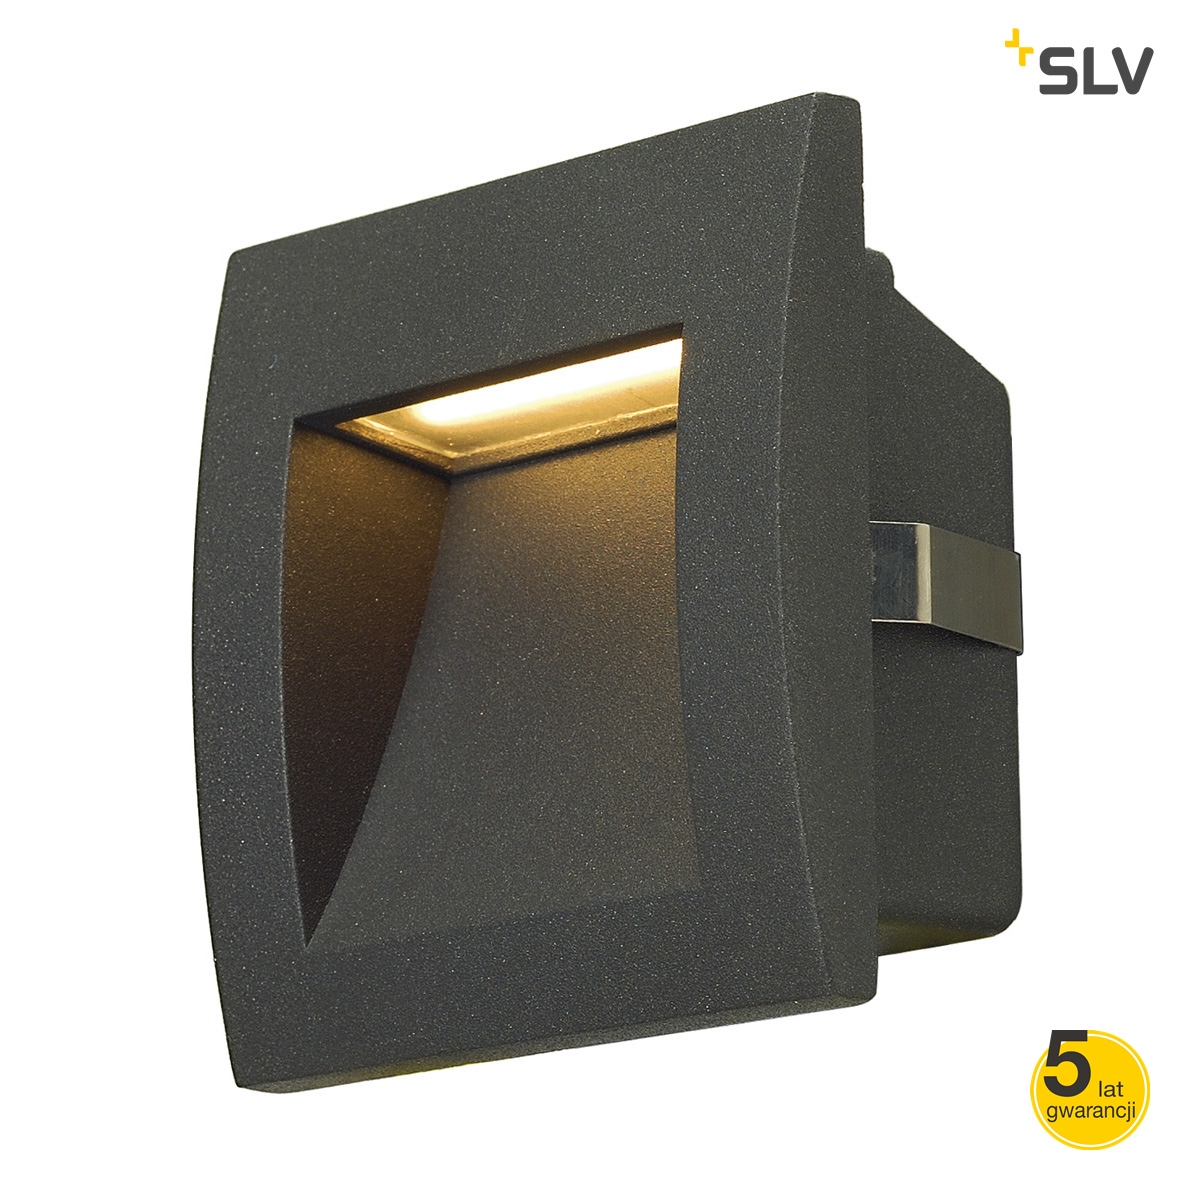 Lampa oprawa do wbudowania IP55 LED DOWNUNDER OUT S antracyt SLV 233605